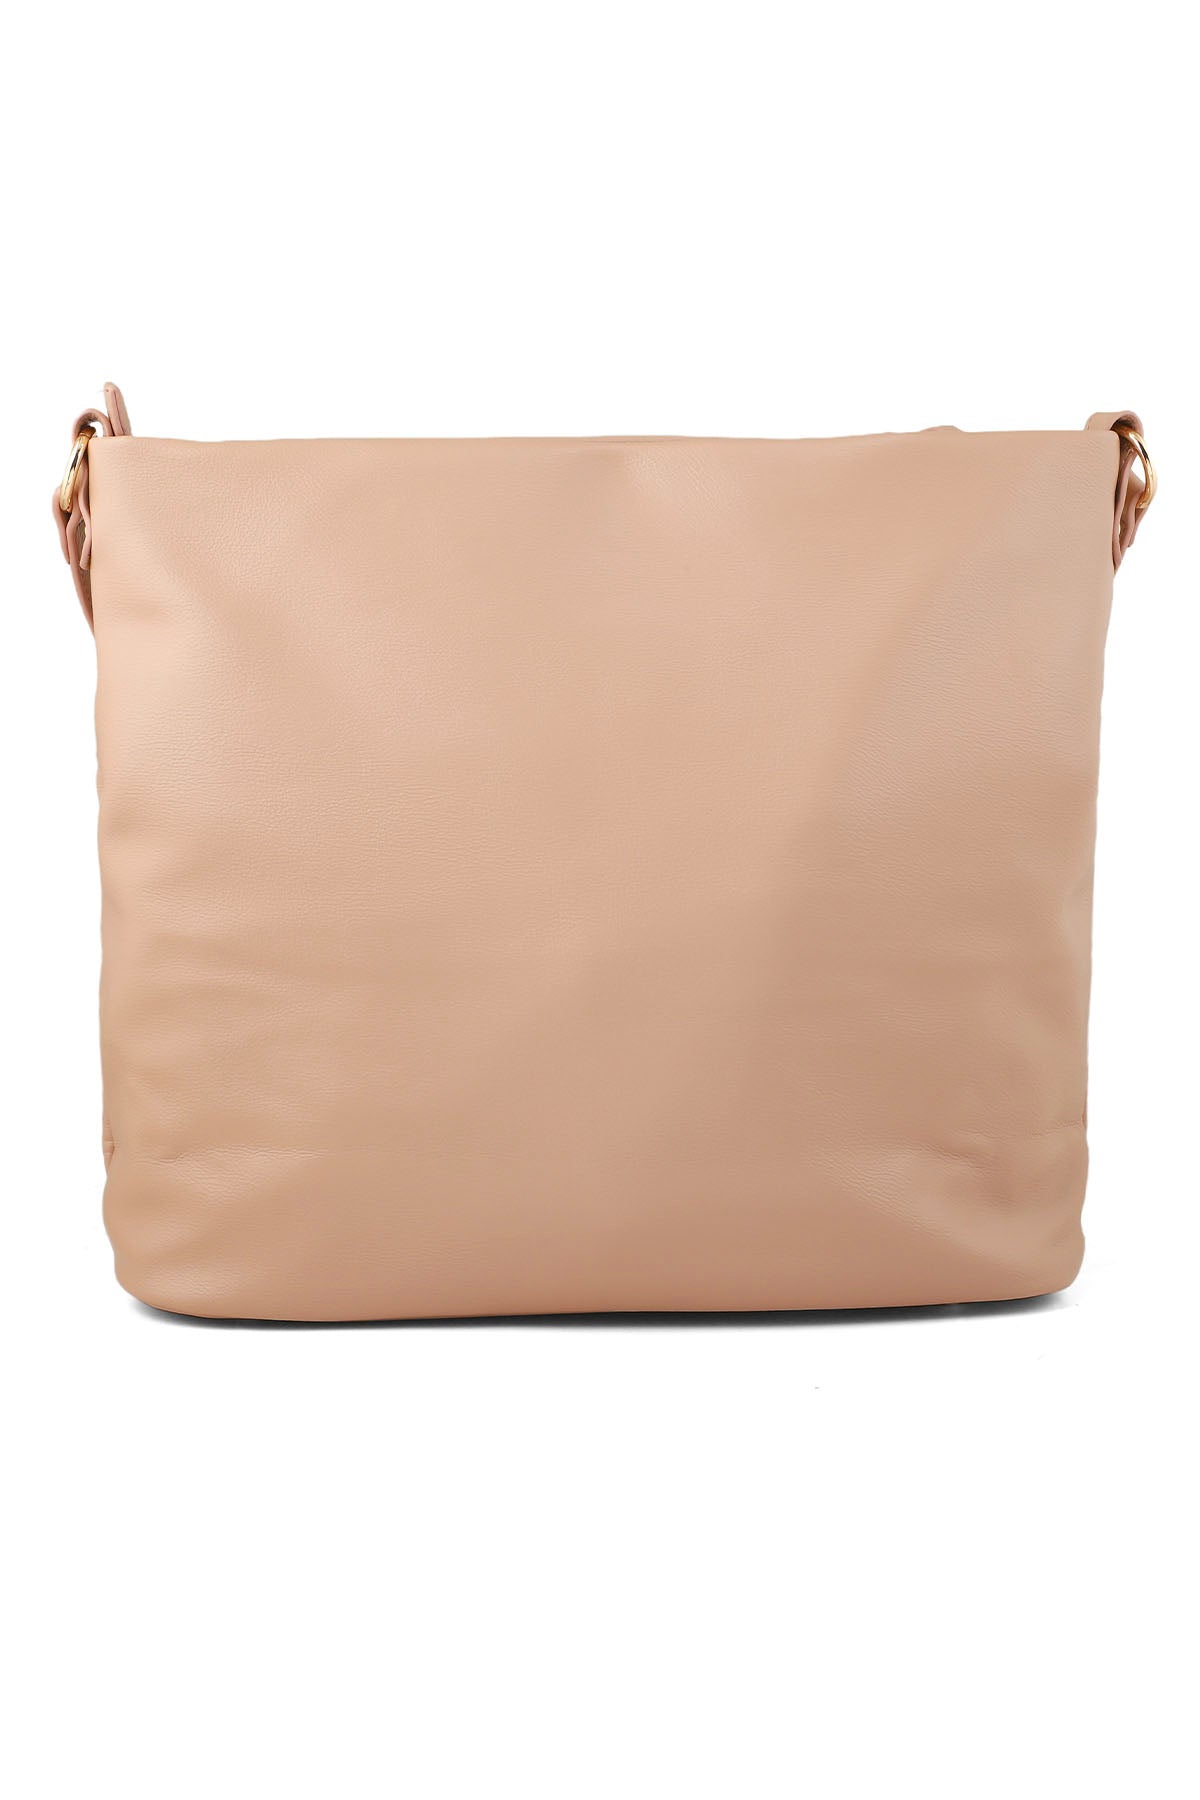 Hobo Hand Bags B15135-Skpink